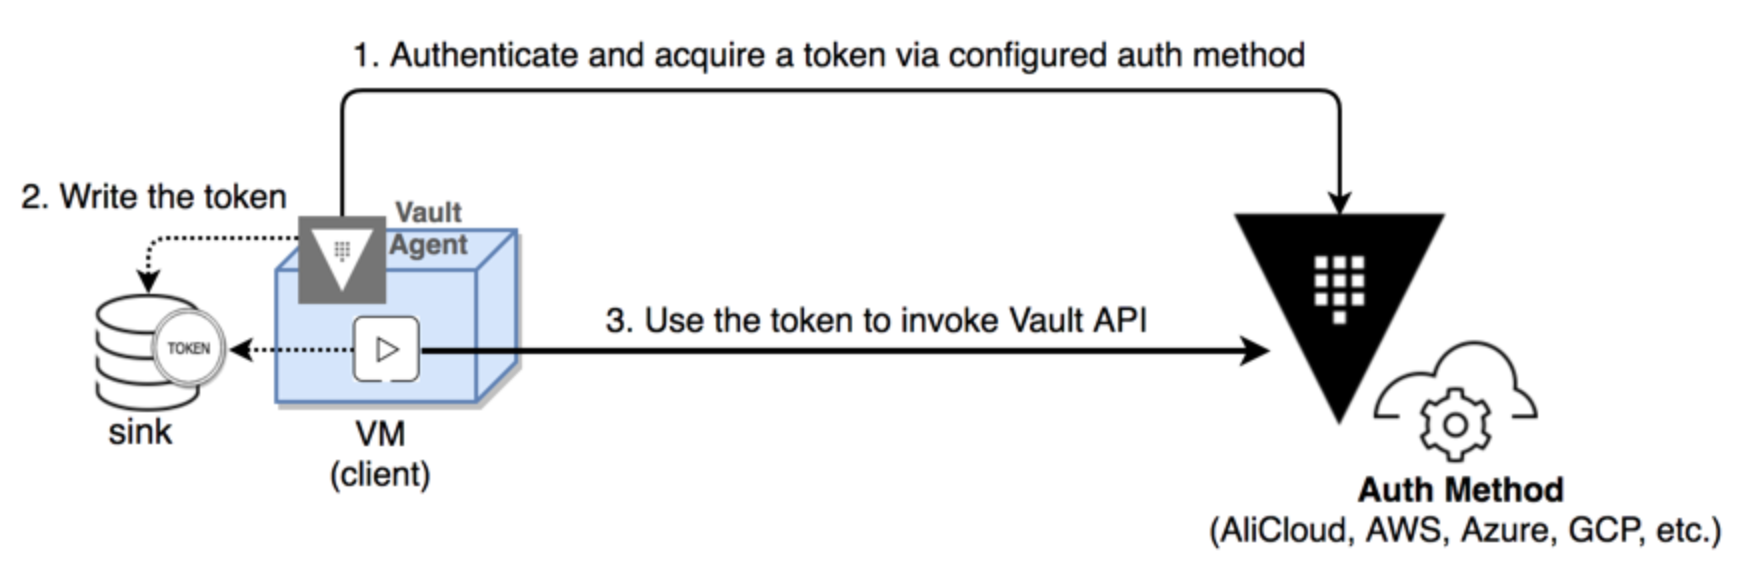 vault-agent-auth-method.png